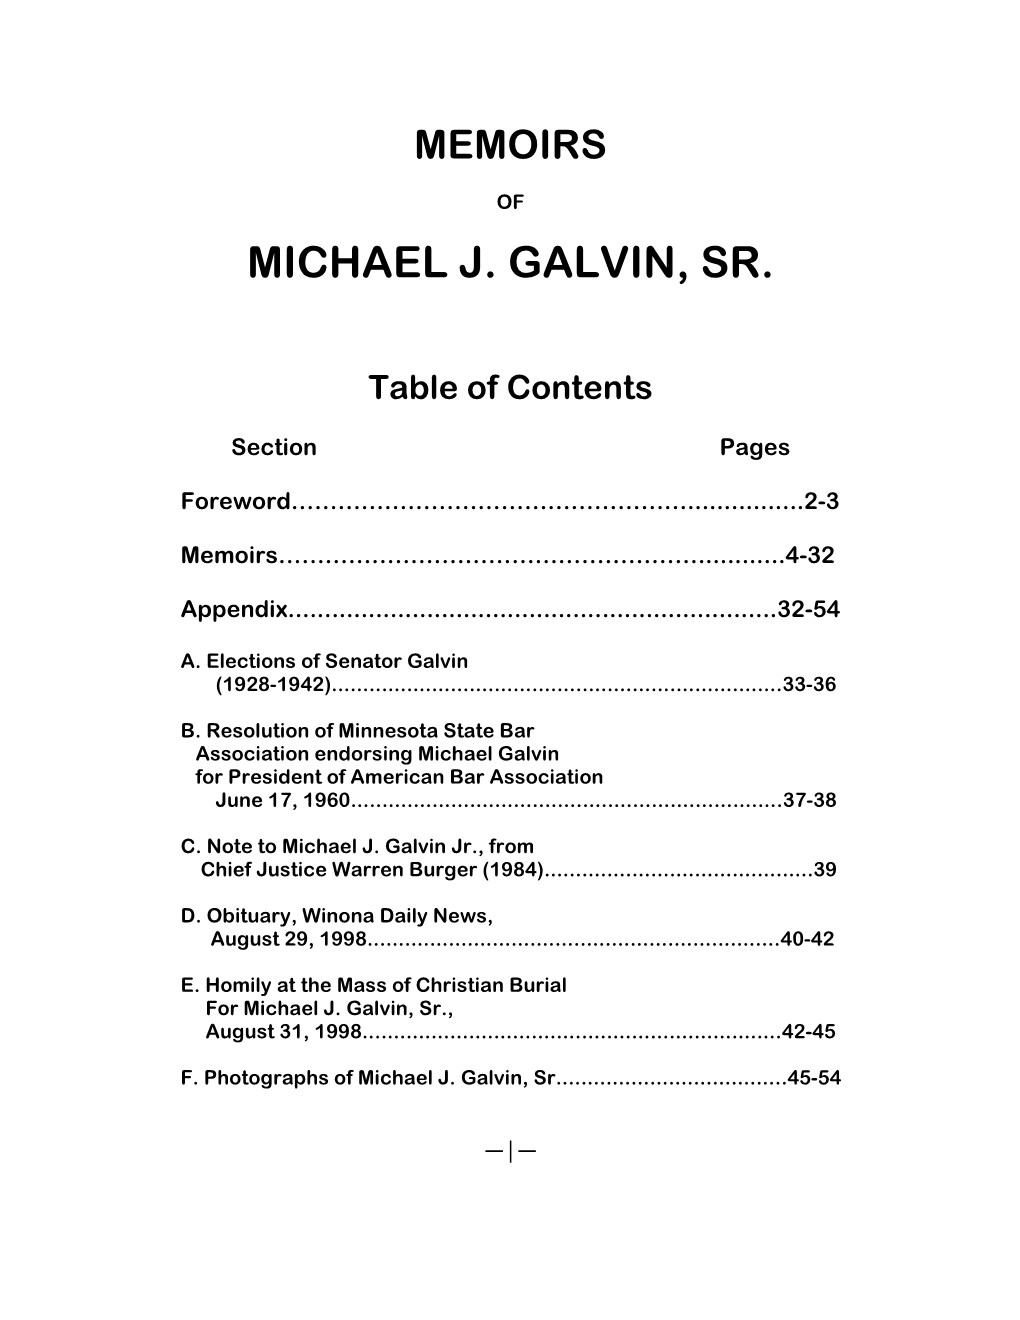 Michael J. Galvin, Sr